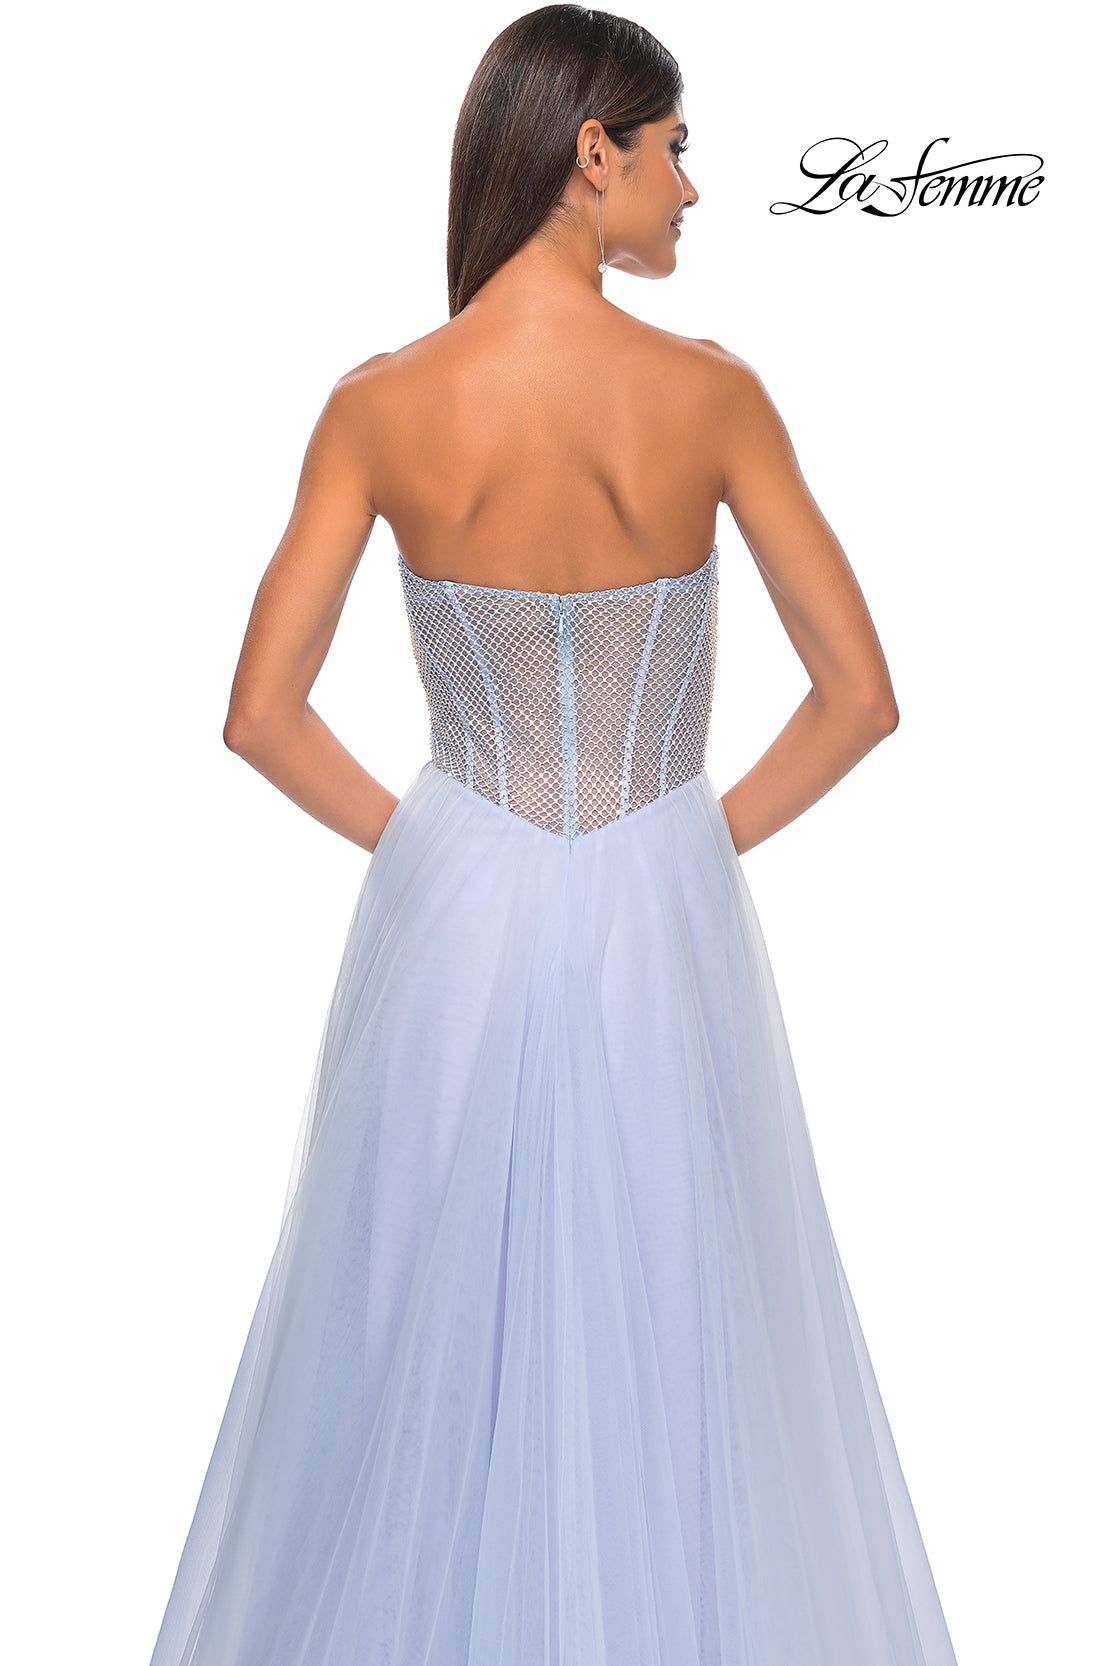 La Femme 32445 Sweetheart Neckline Zipper Back High Slit Hot Stone/Fishnet/Tulle A-Line Evening Dress